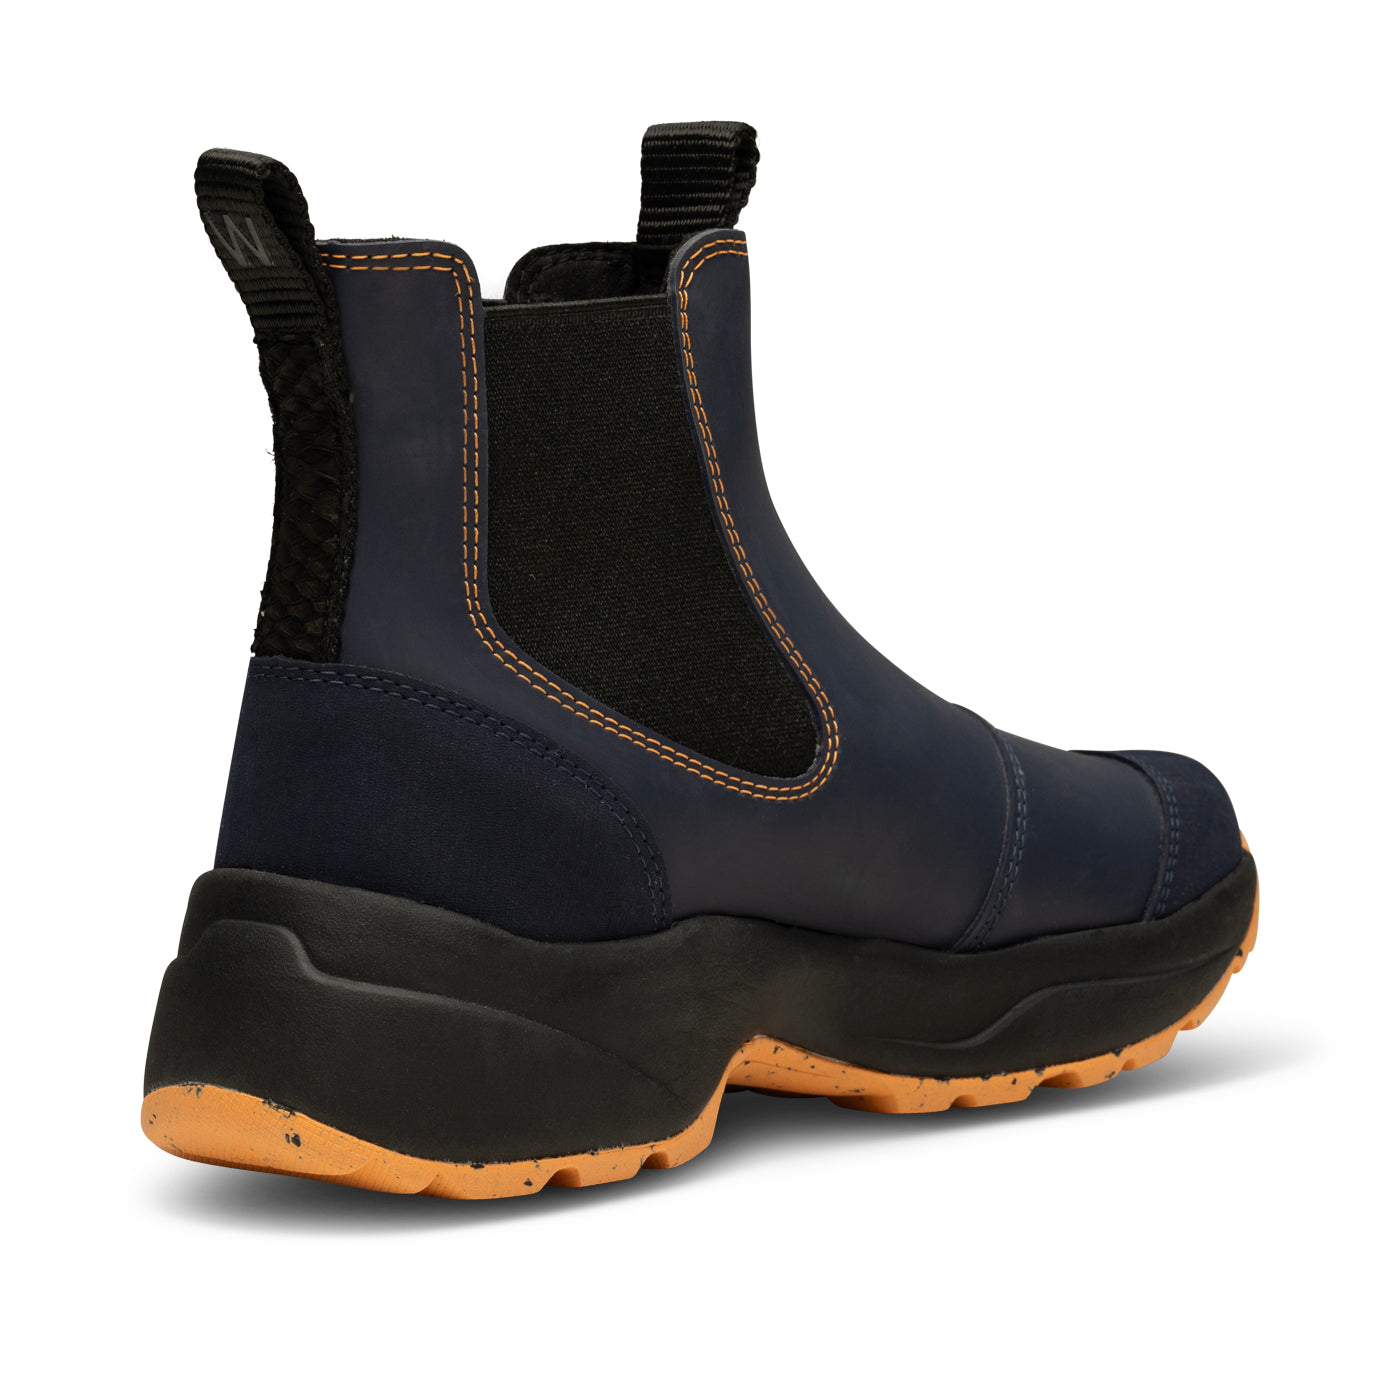 WODEN Siri Waterproof Rubber Boots 1002 Dark Navy/Papaya